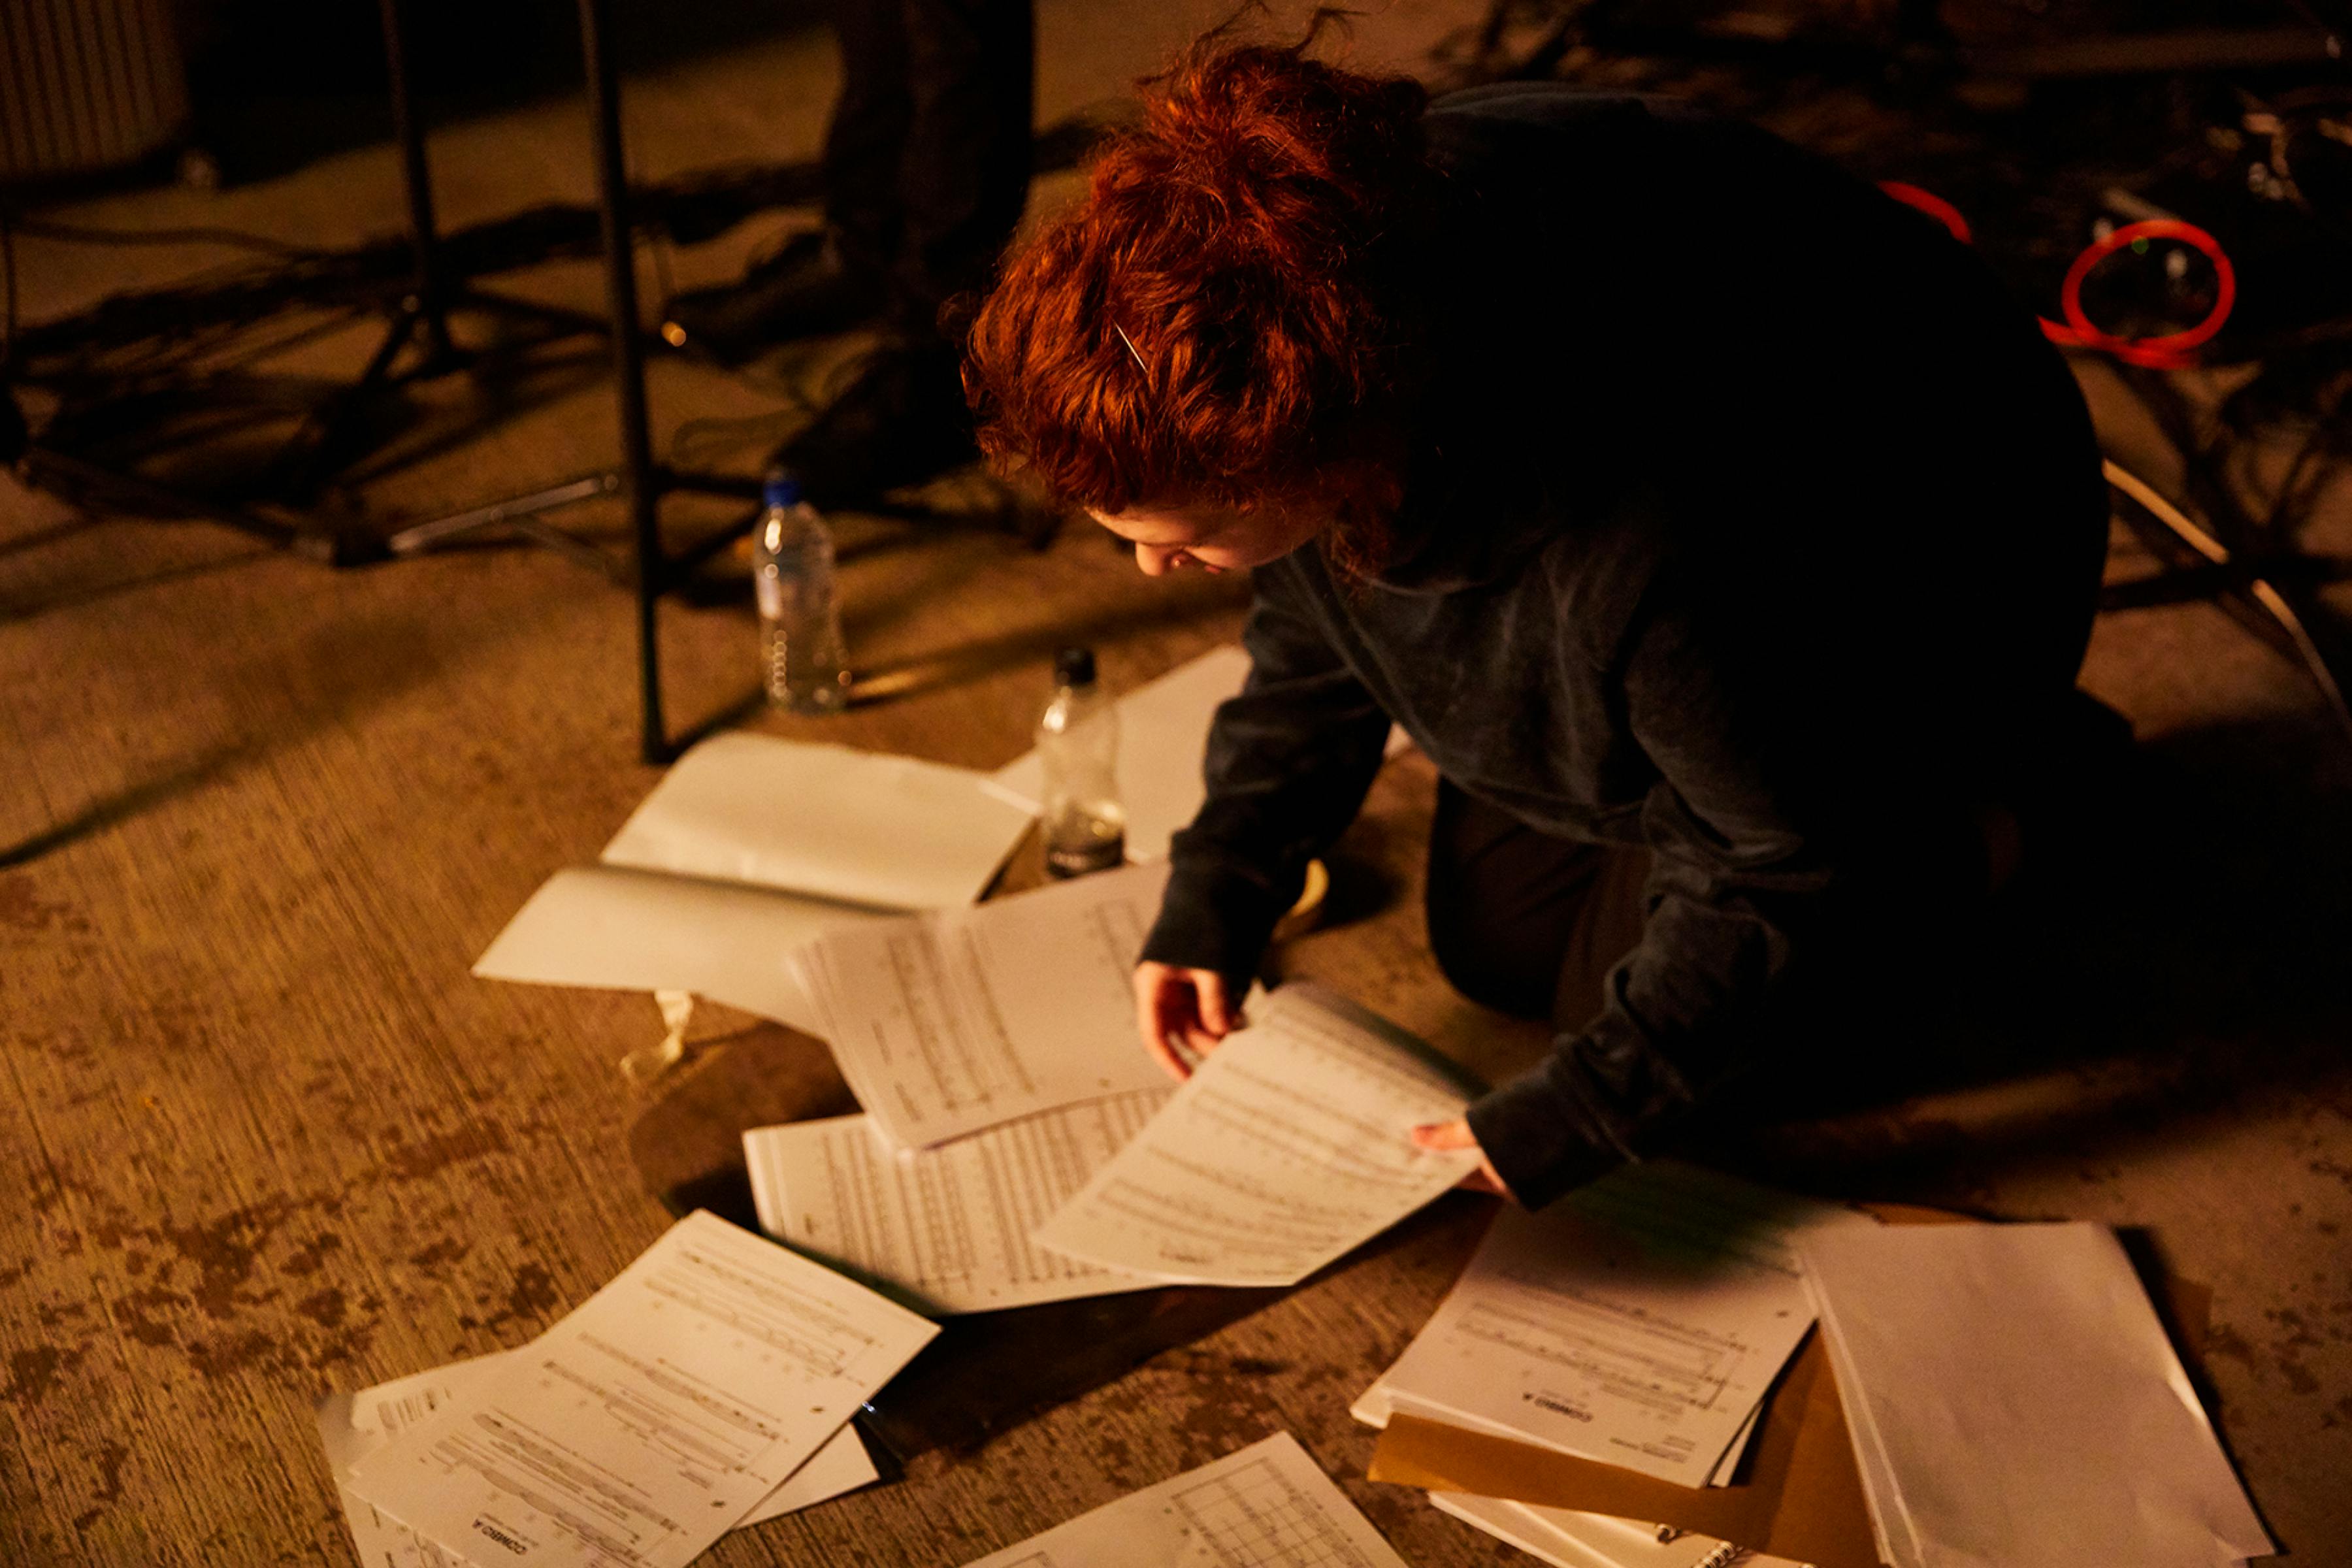 A woman kneeling over sheets of manuscript paper